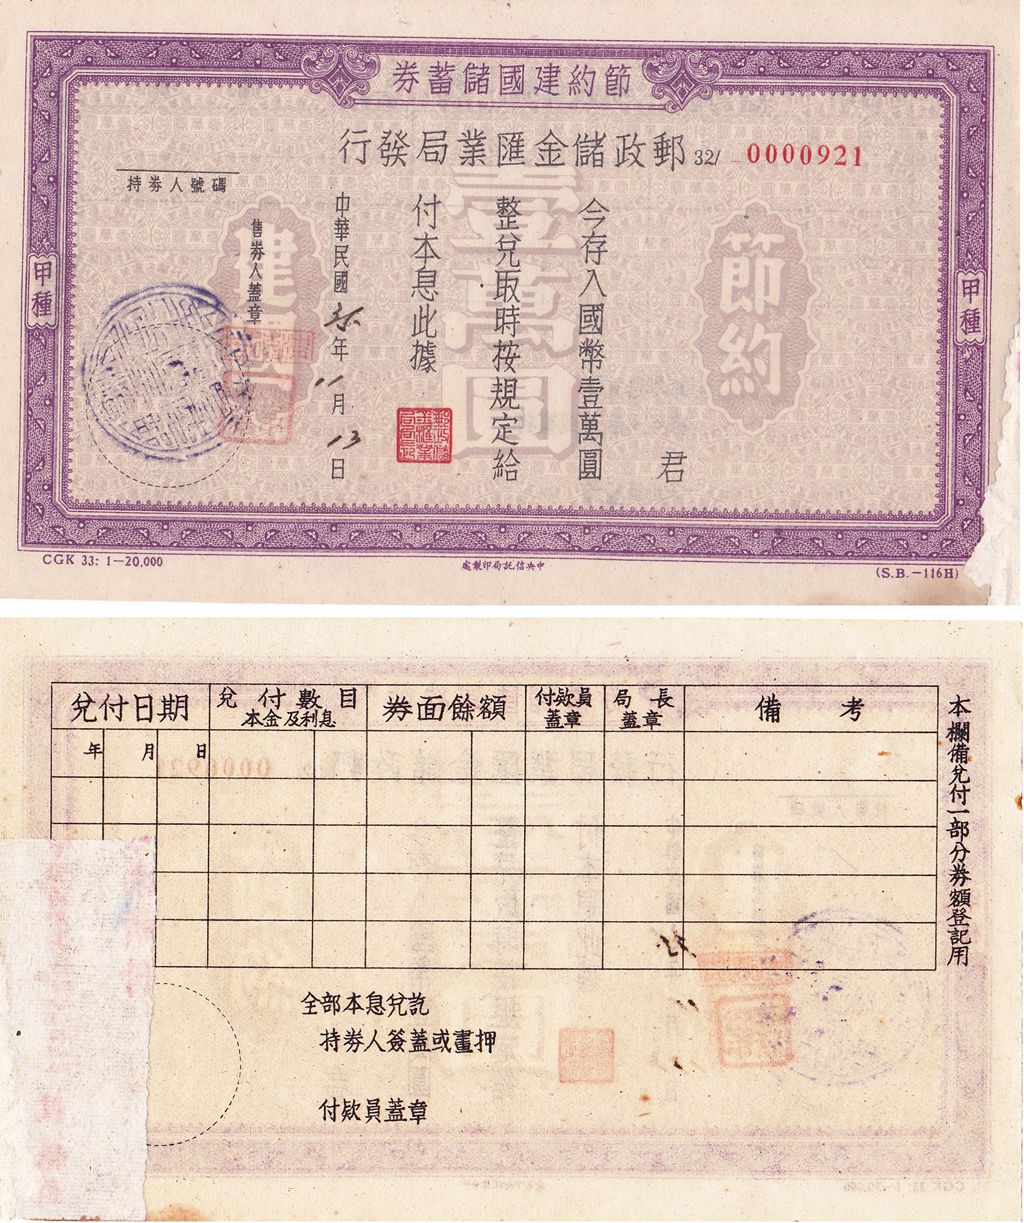 B3365, China Reconstruction Bond Loan, 10000 Dollars (Highest), Post Saving Bank 1946